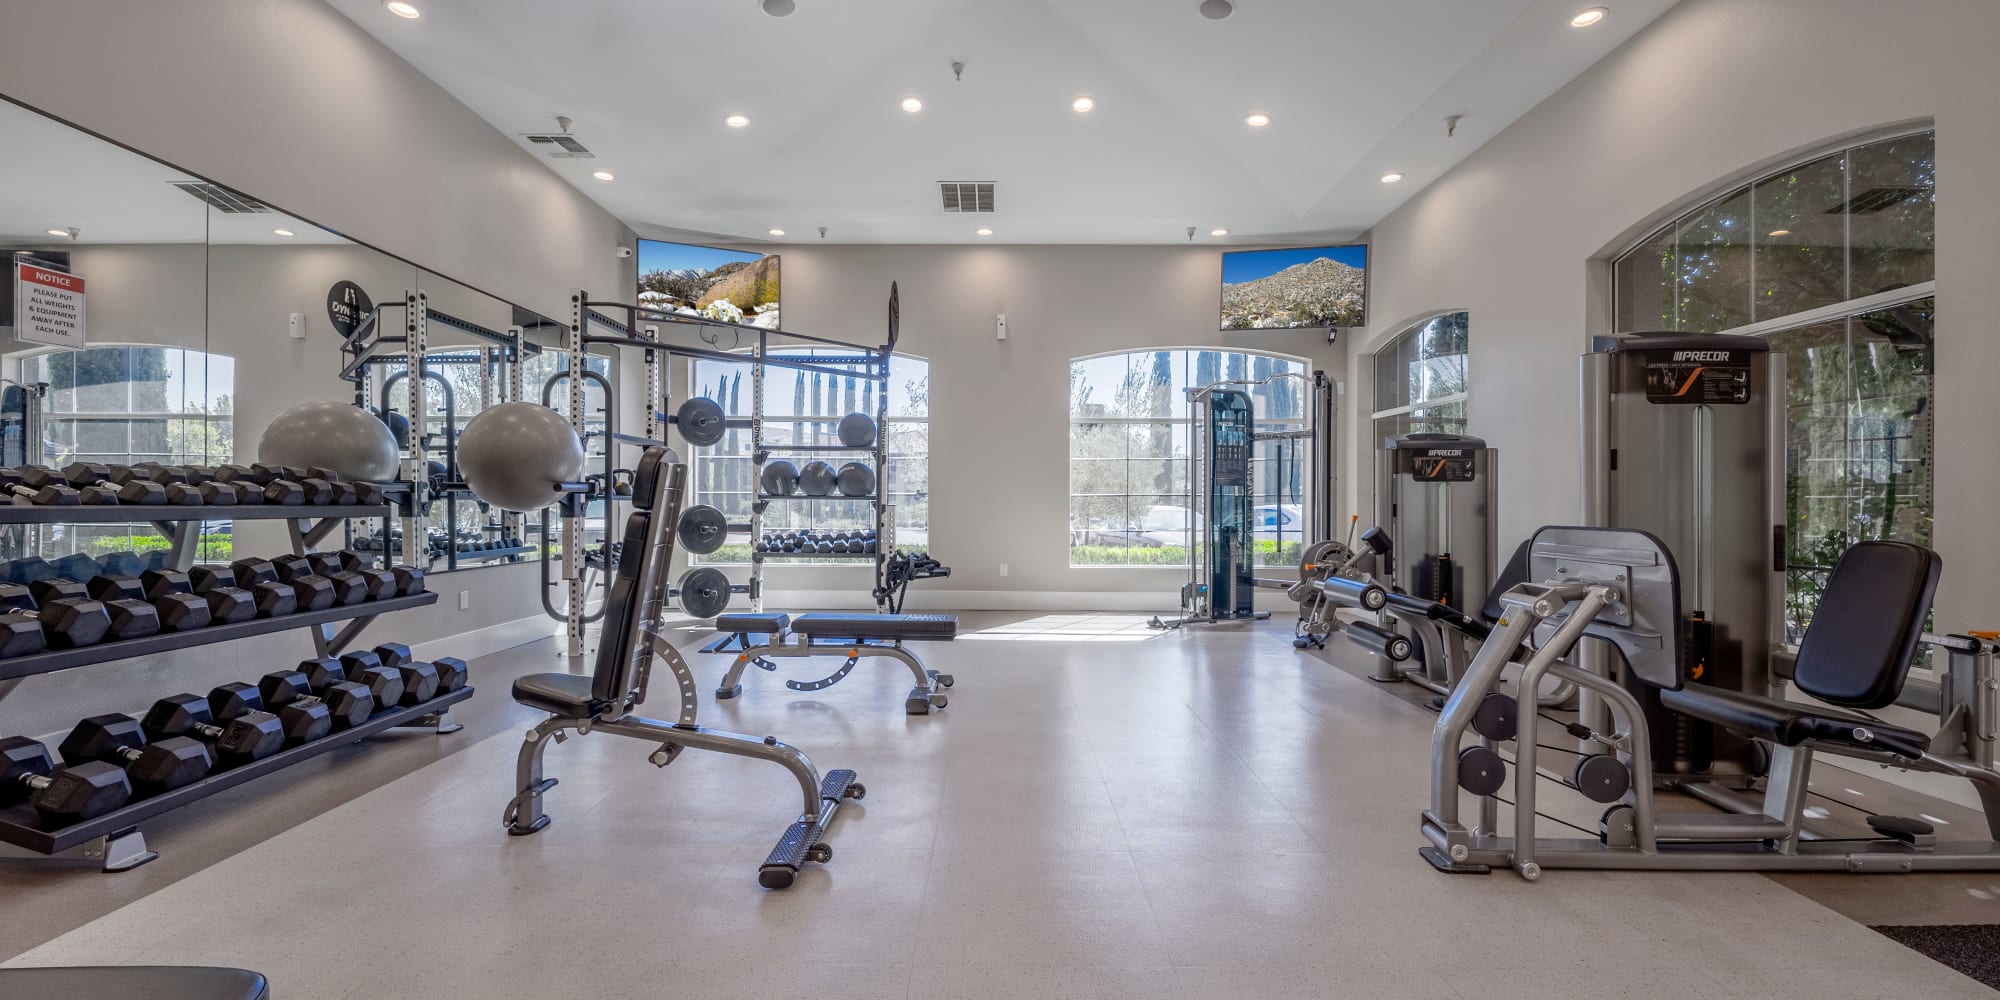 Fitness center at Villagio Luxury Apartments in Sacramento, California